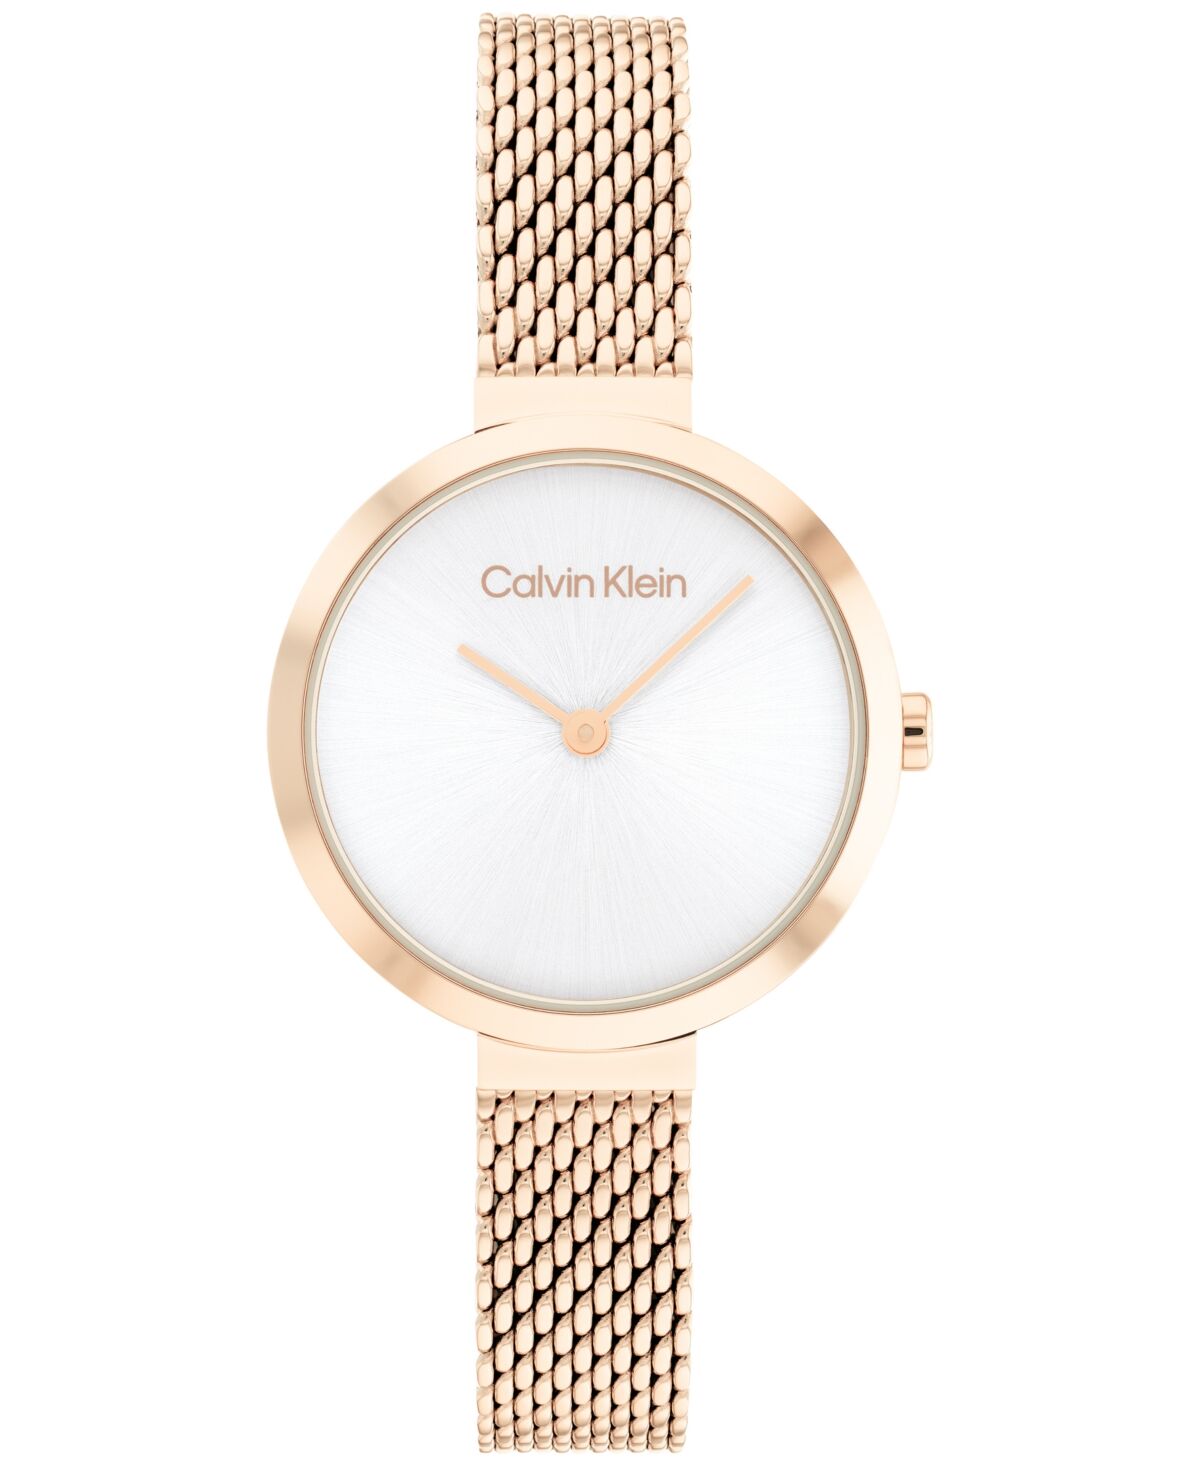 Calvin Klein Carnation Gold-Tone Mesh Bracelet Watch 28mm - Carnation Gold